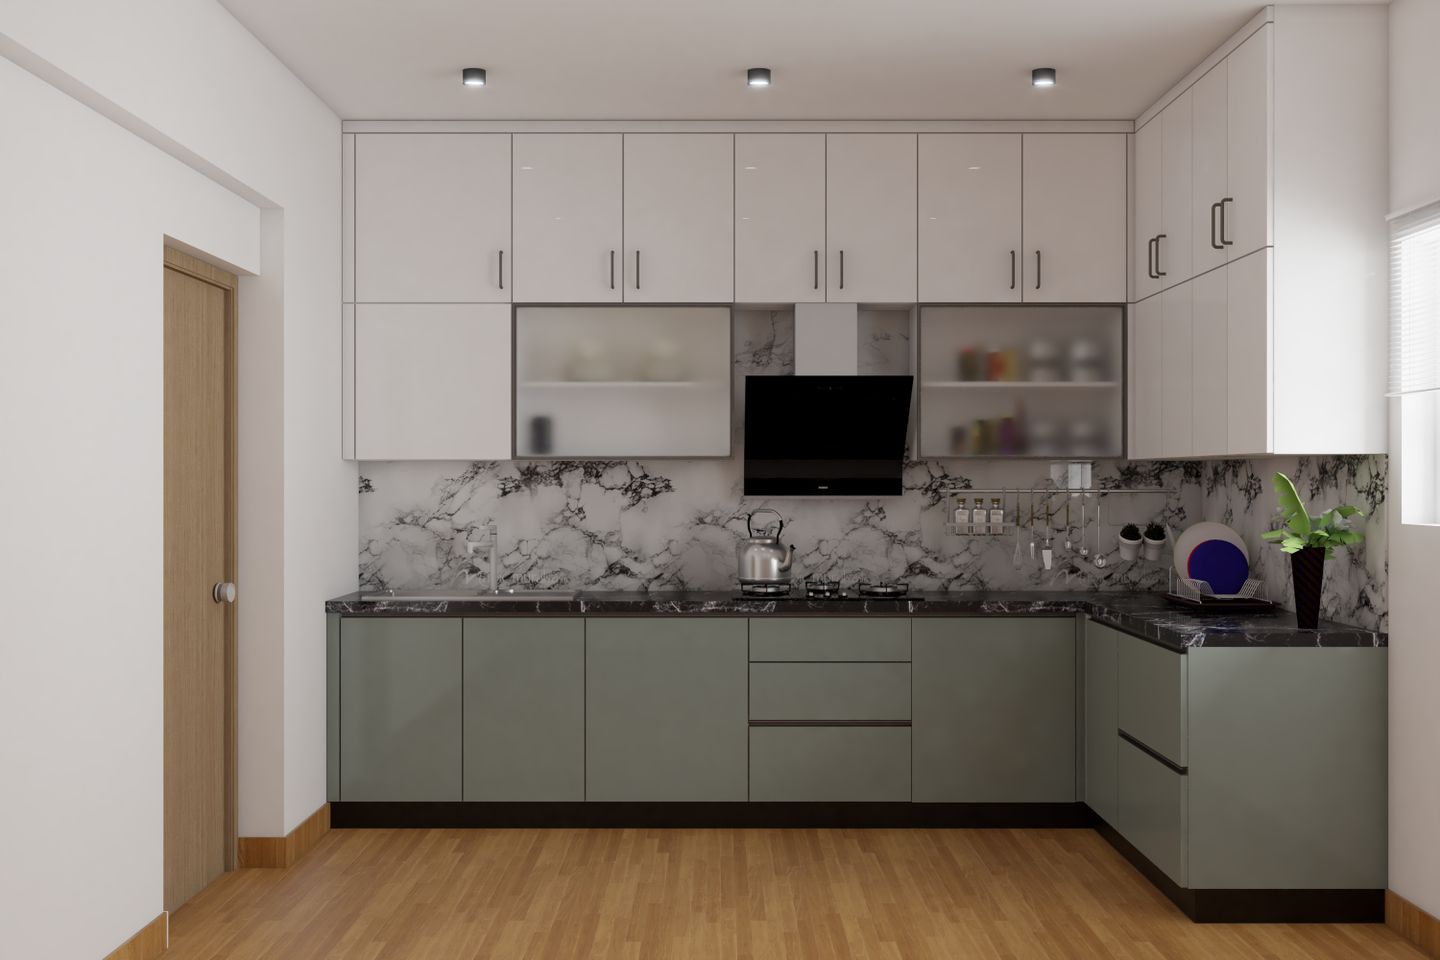 Modern Kitchen Design With Marble Backsplash - Livspace